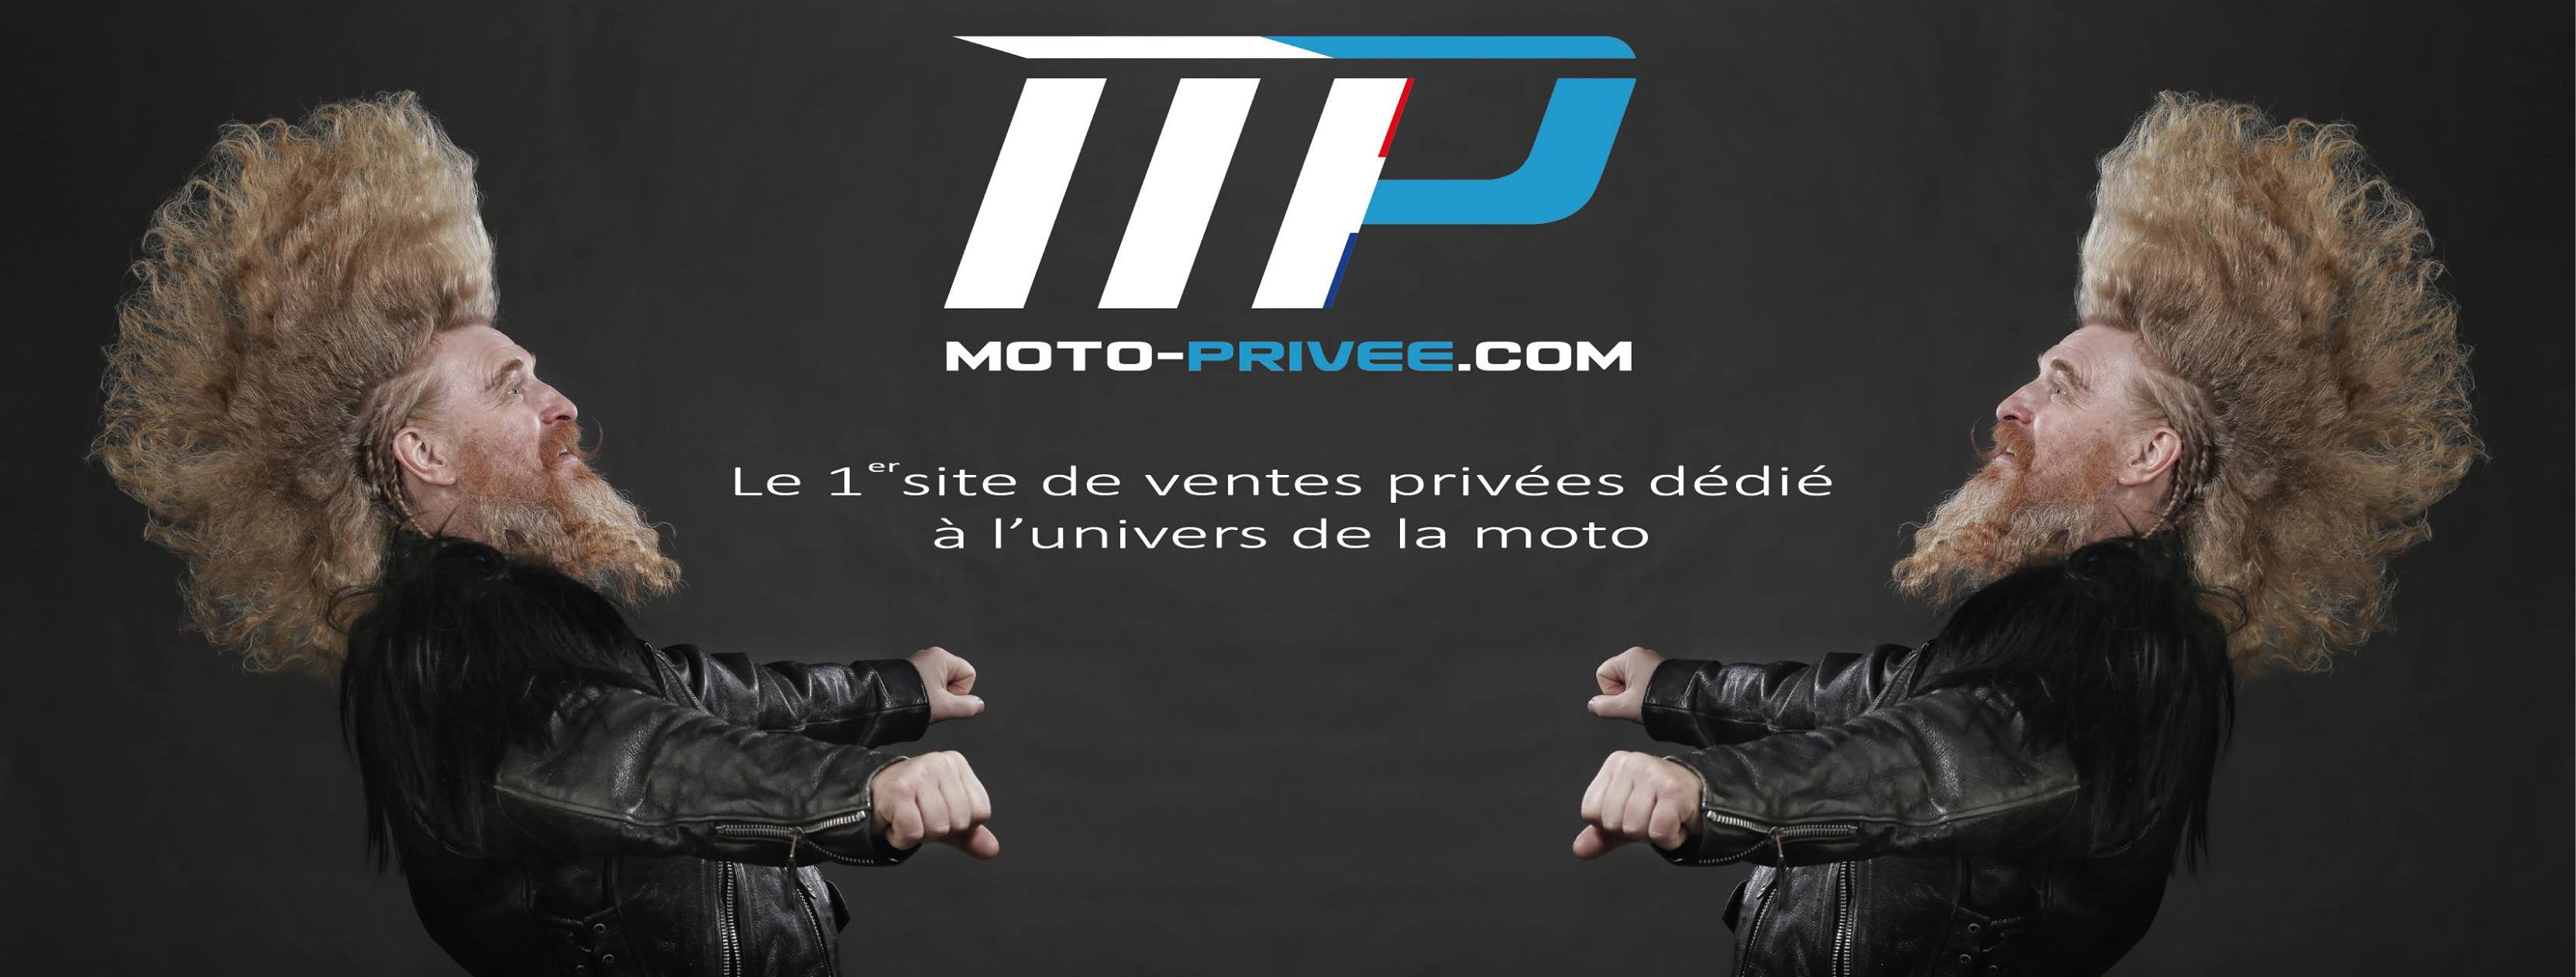 www.moto-privee.com